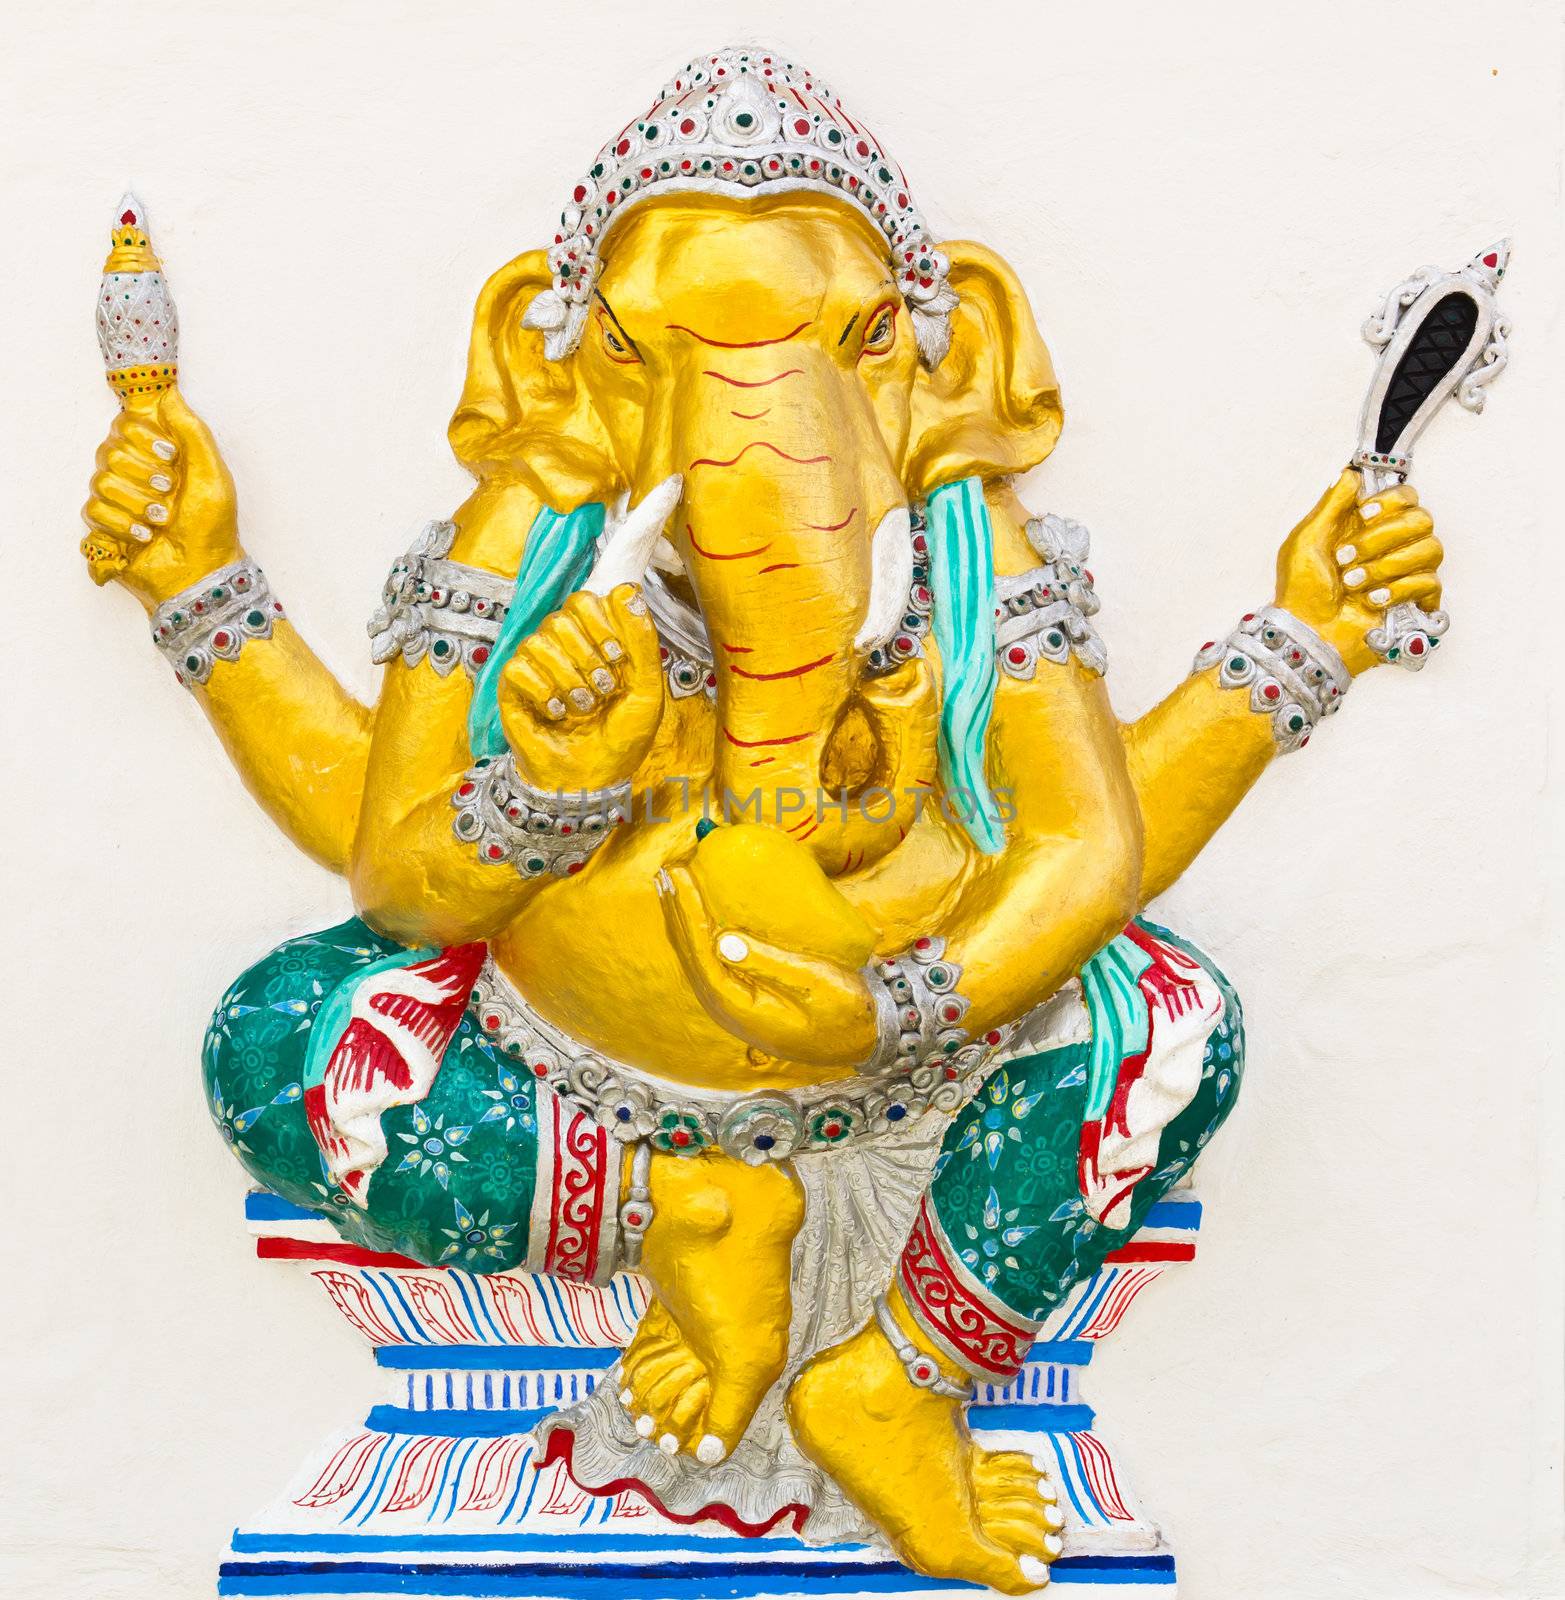 Indian or Hindu God Named Triaksara Ganapati at temple in thailand